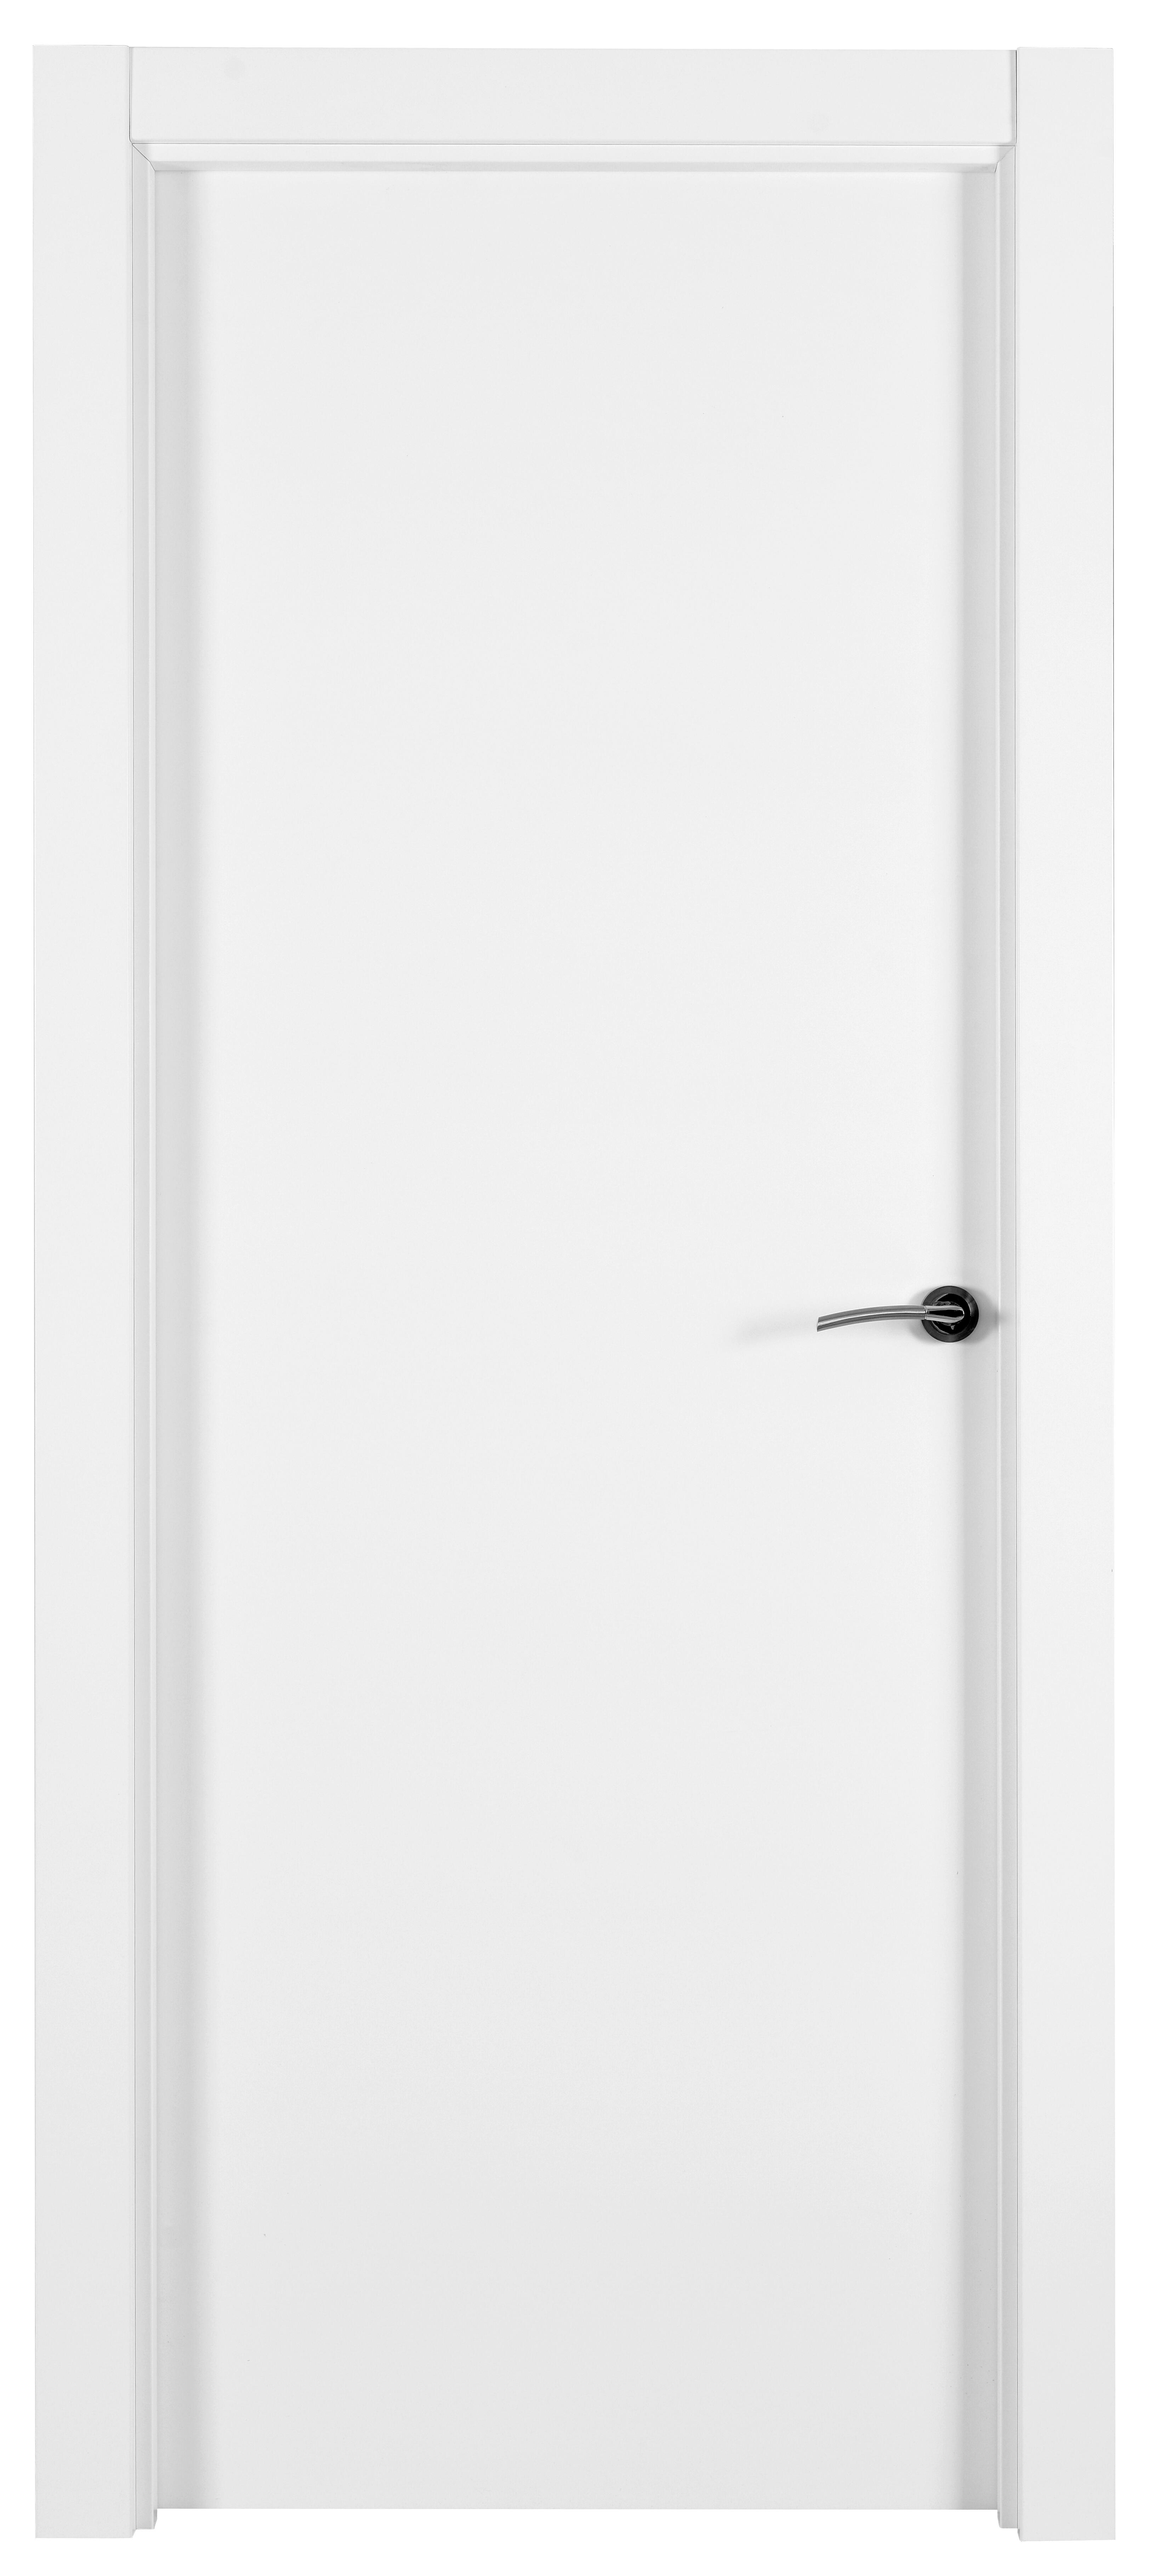 Puerta lyon blanco apertura izquierda 72.5cm